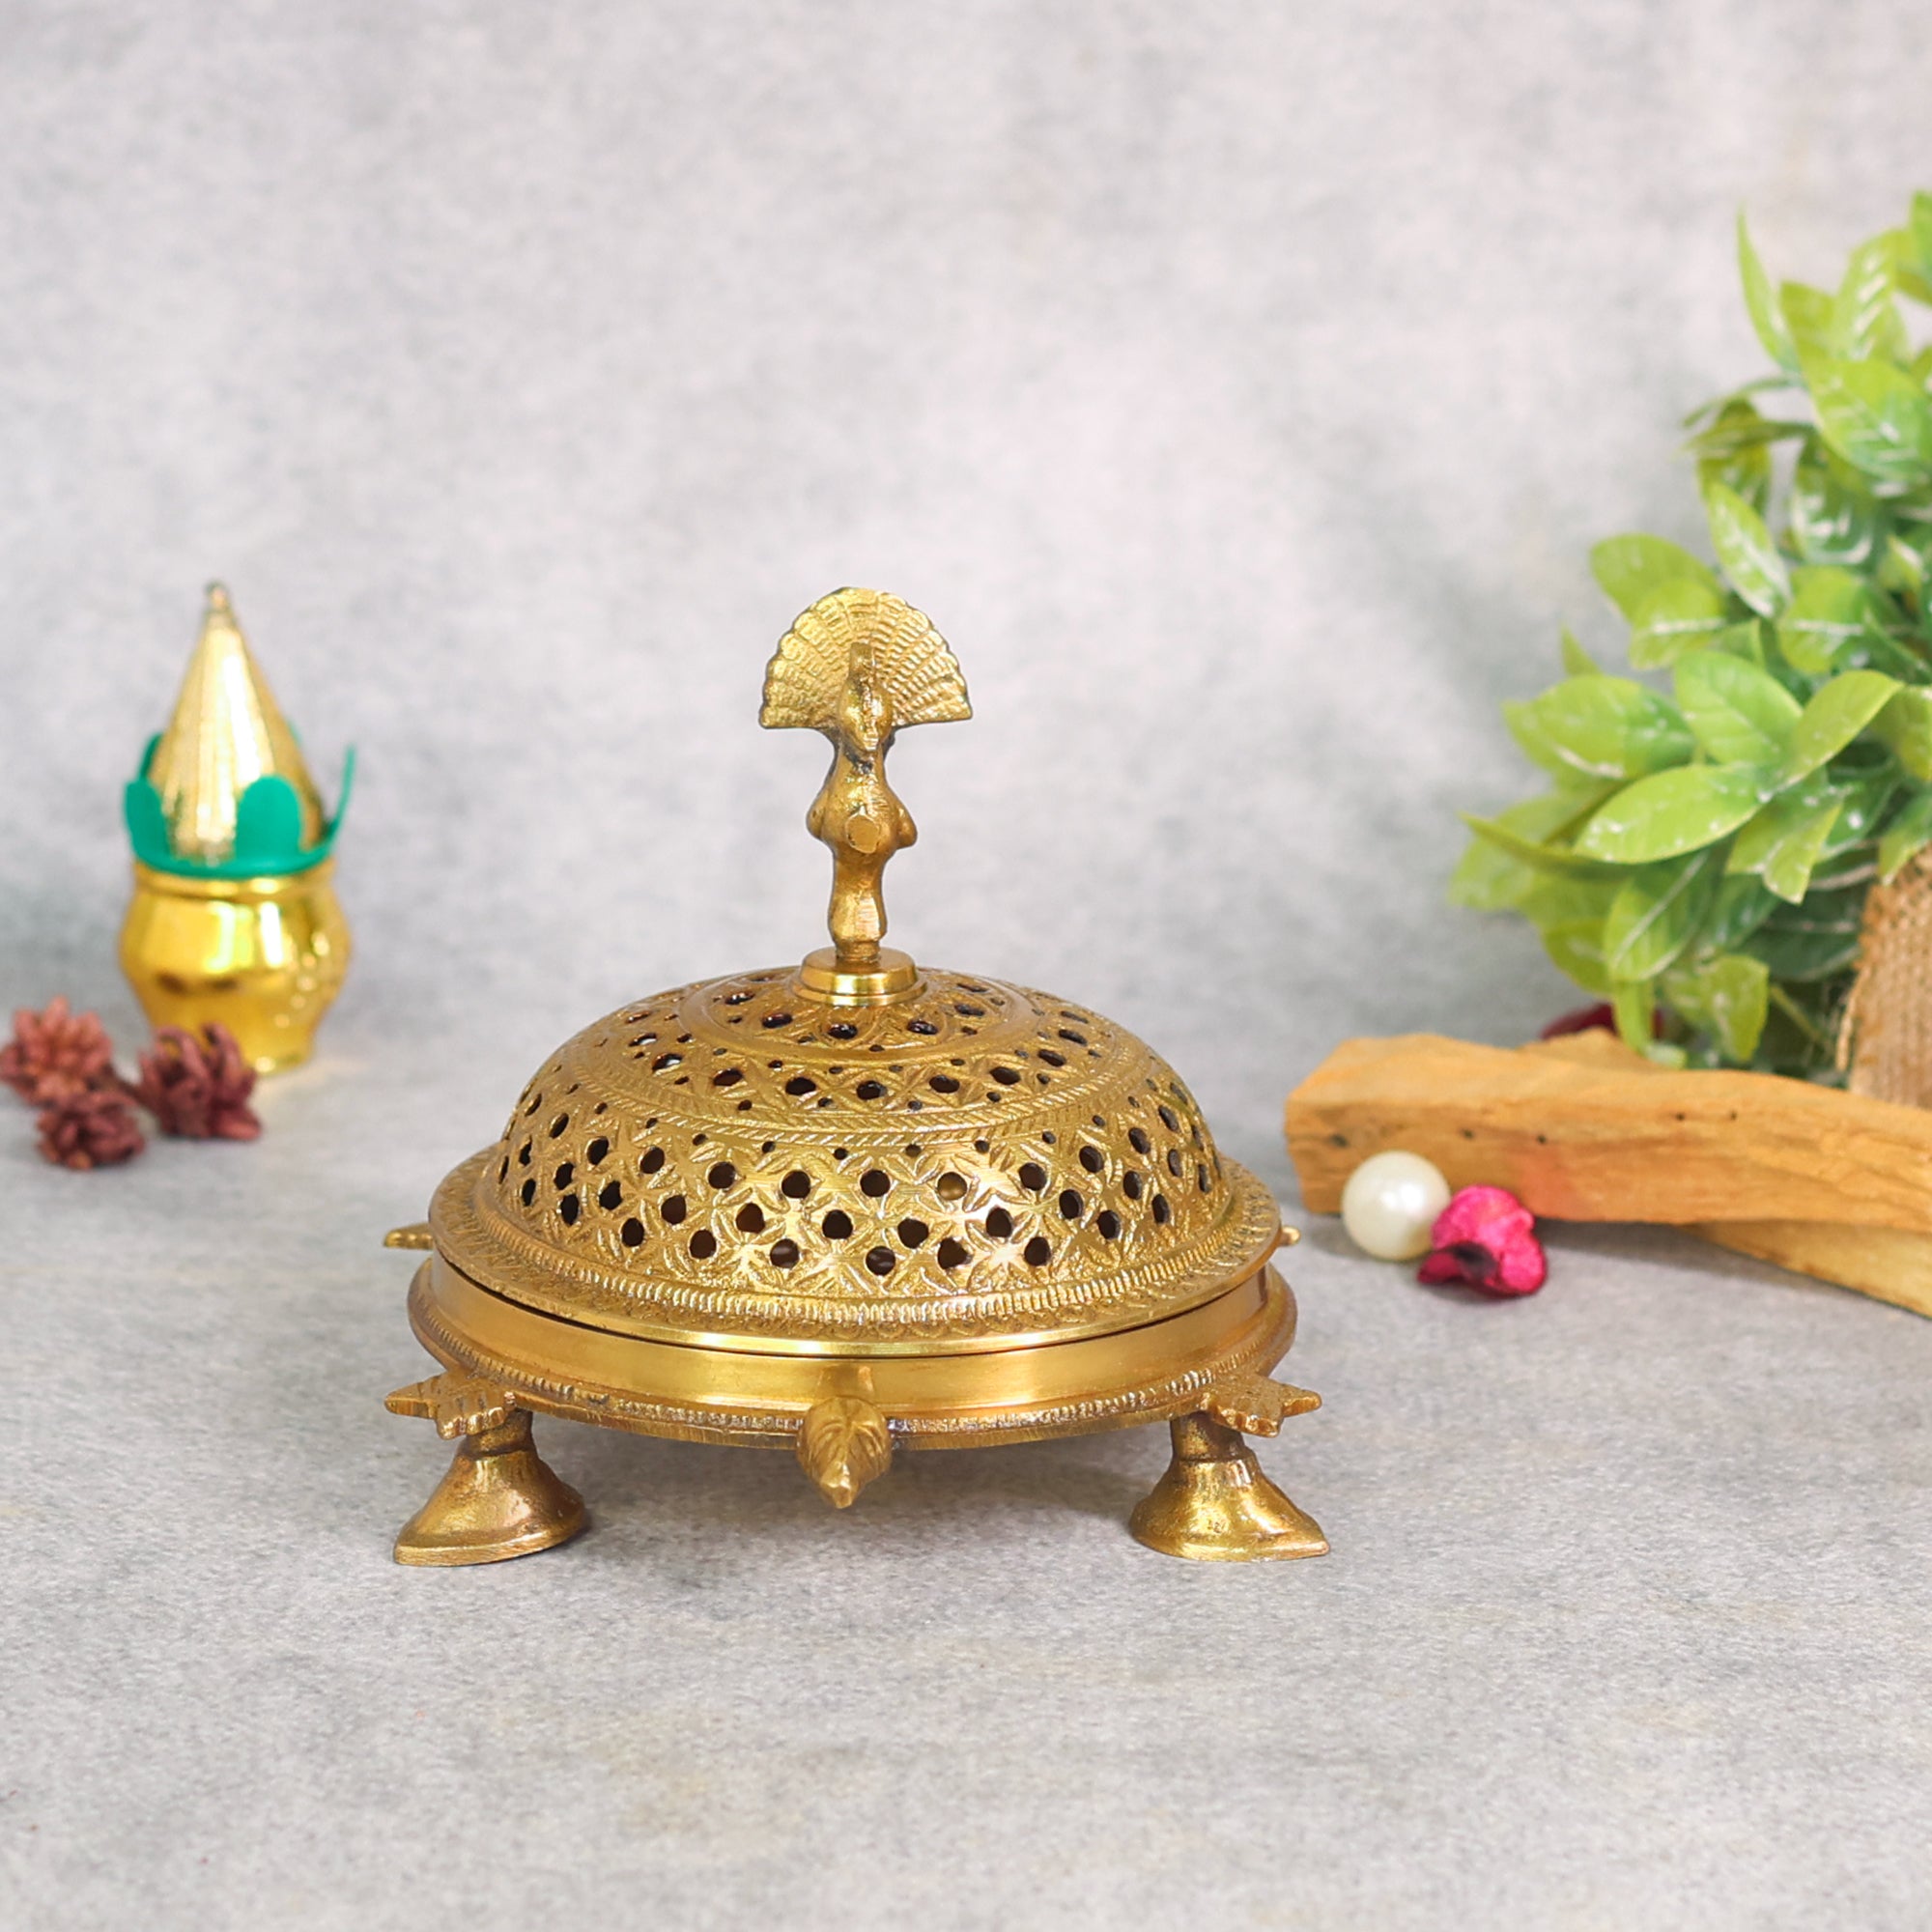 Antique brass tortoise burner